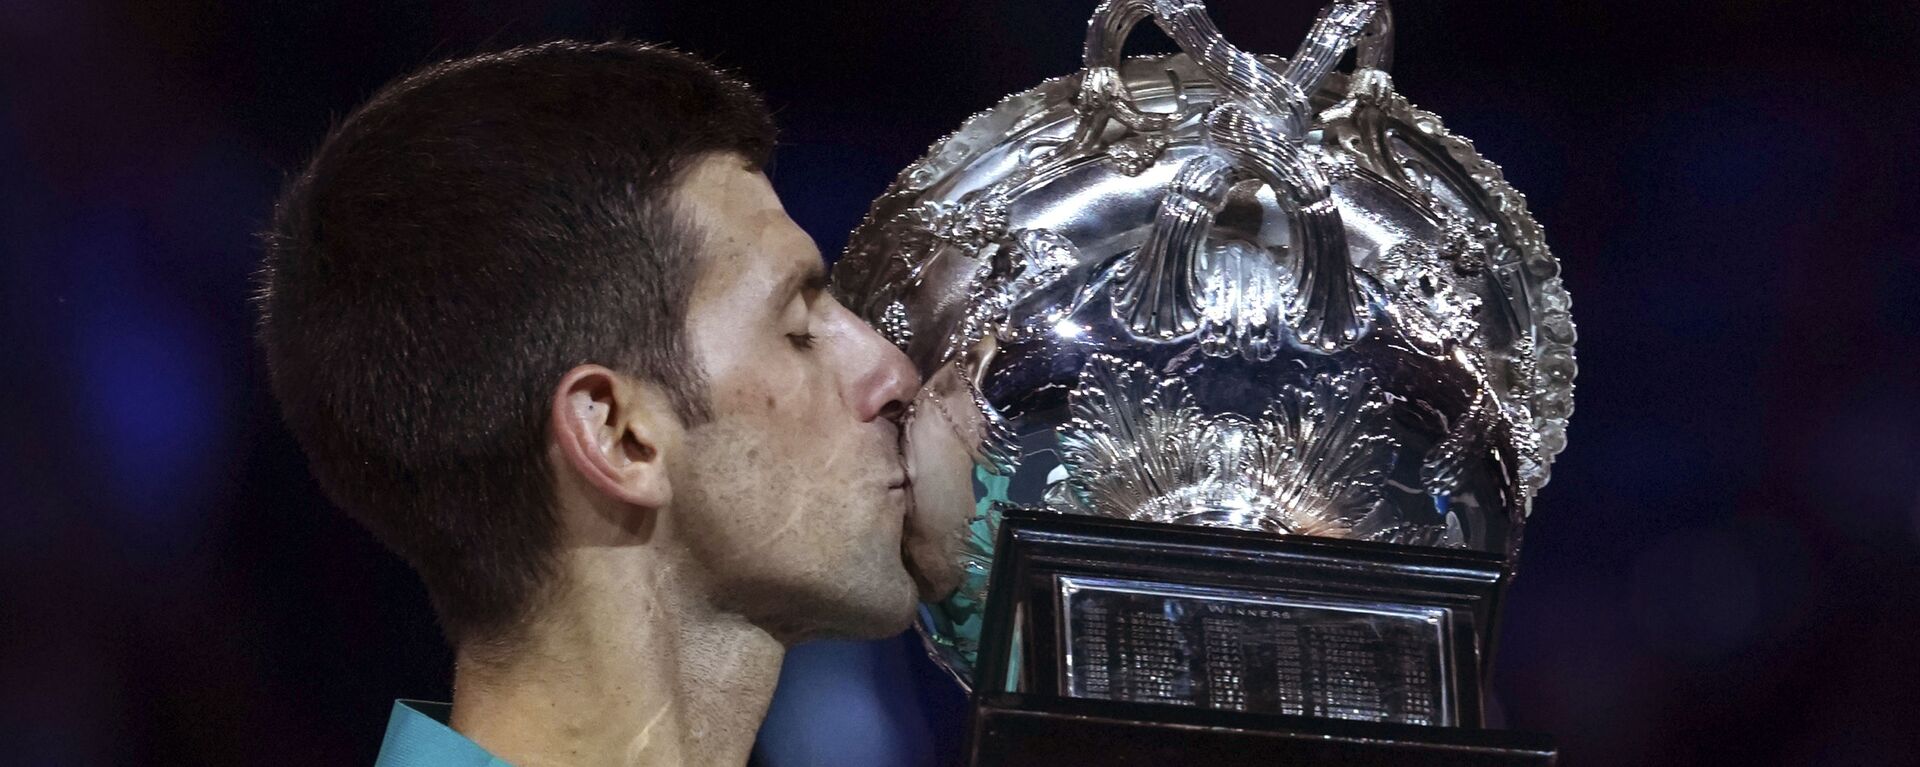 Novak Đoković sa trofejom Australijan opena 2021. - Sputnik Srbija, 1920, 07.12.2021